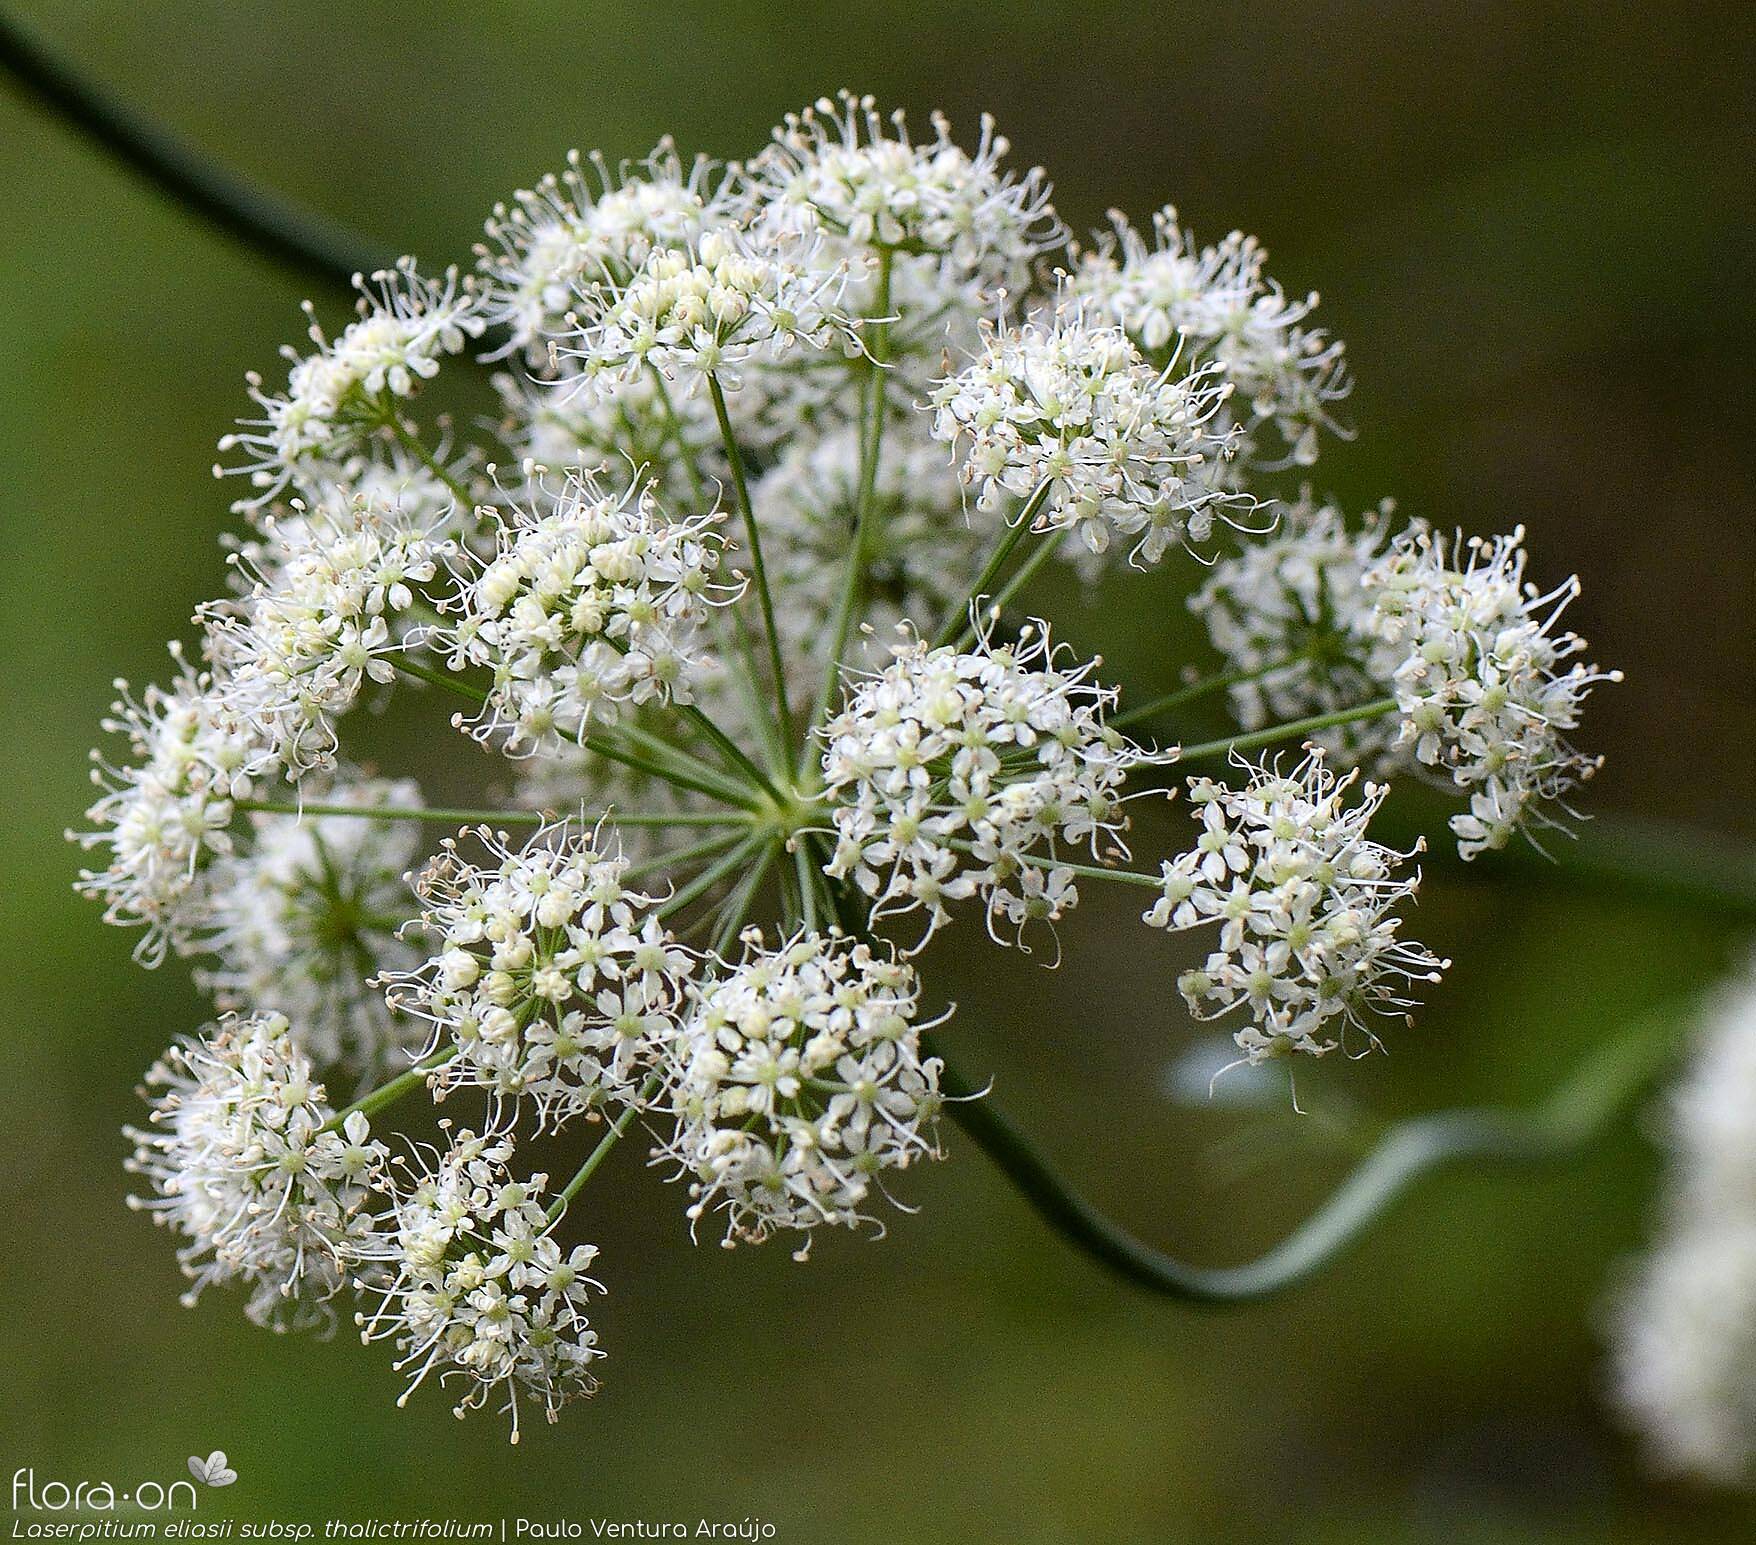 Laserpitium eliasii thalictrifolium - Flor (geral) | Paulo Ventura Araújo; CC BY-NC 4.0